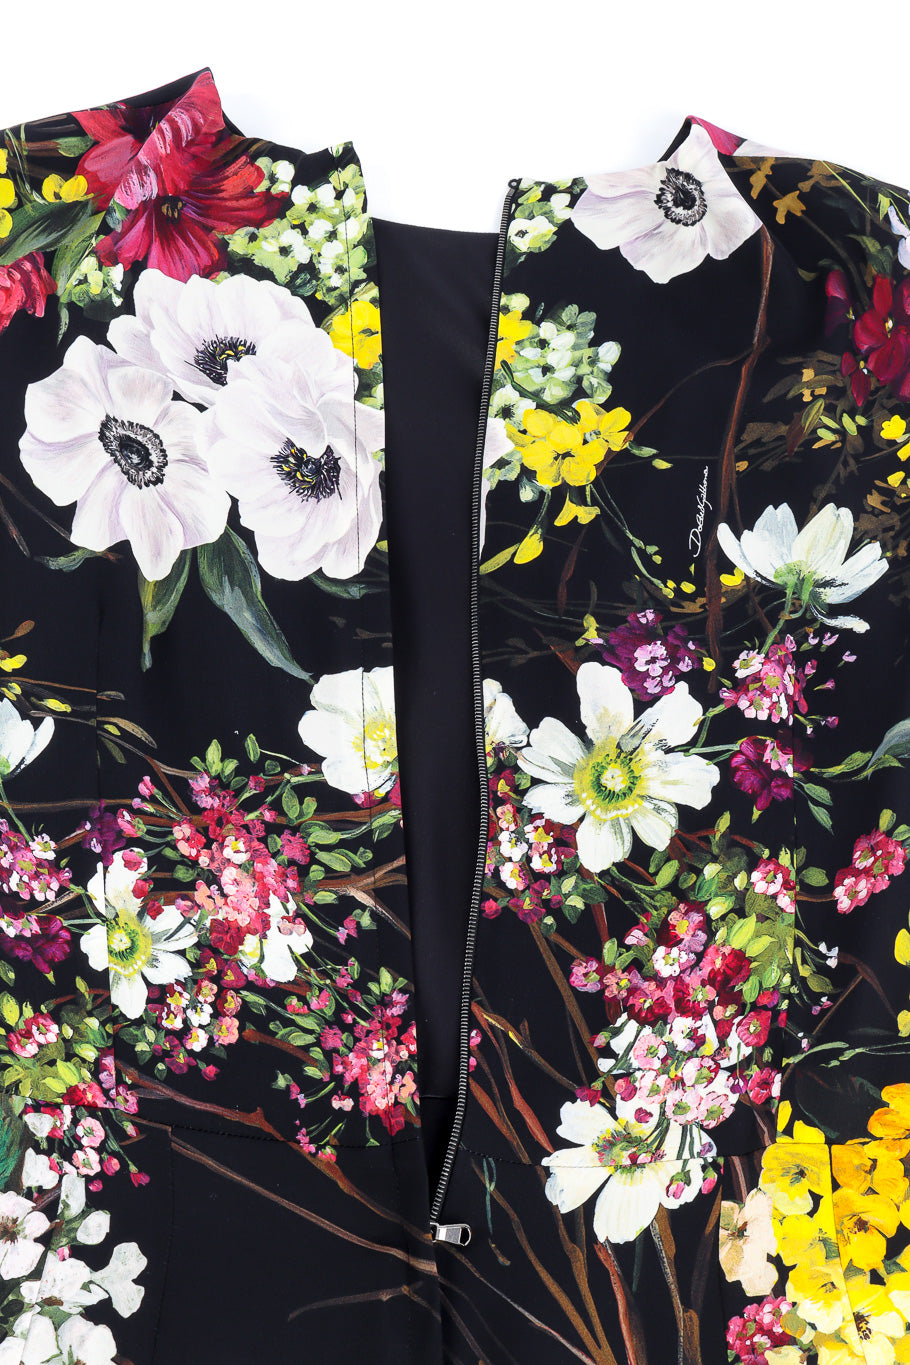 Dolce & Gabbana Floral Printed Sheath Dress back zipper @recessla